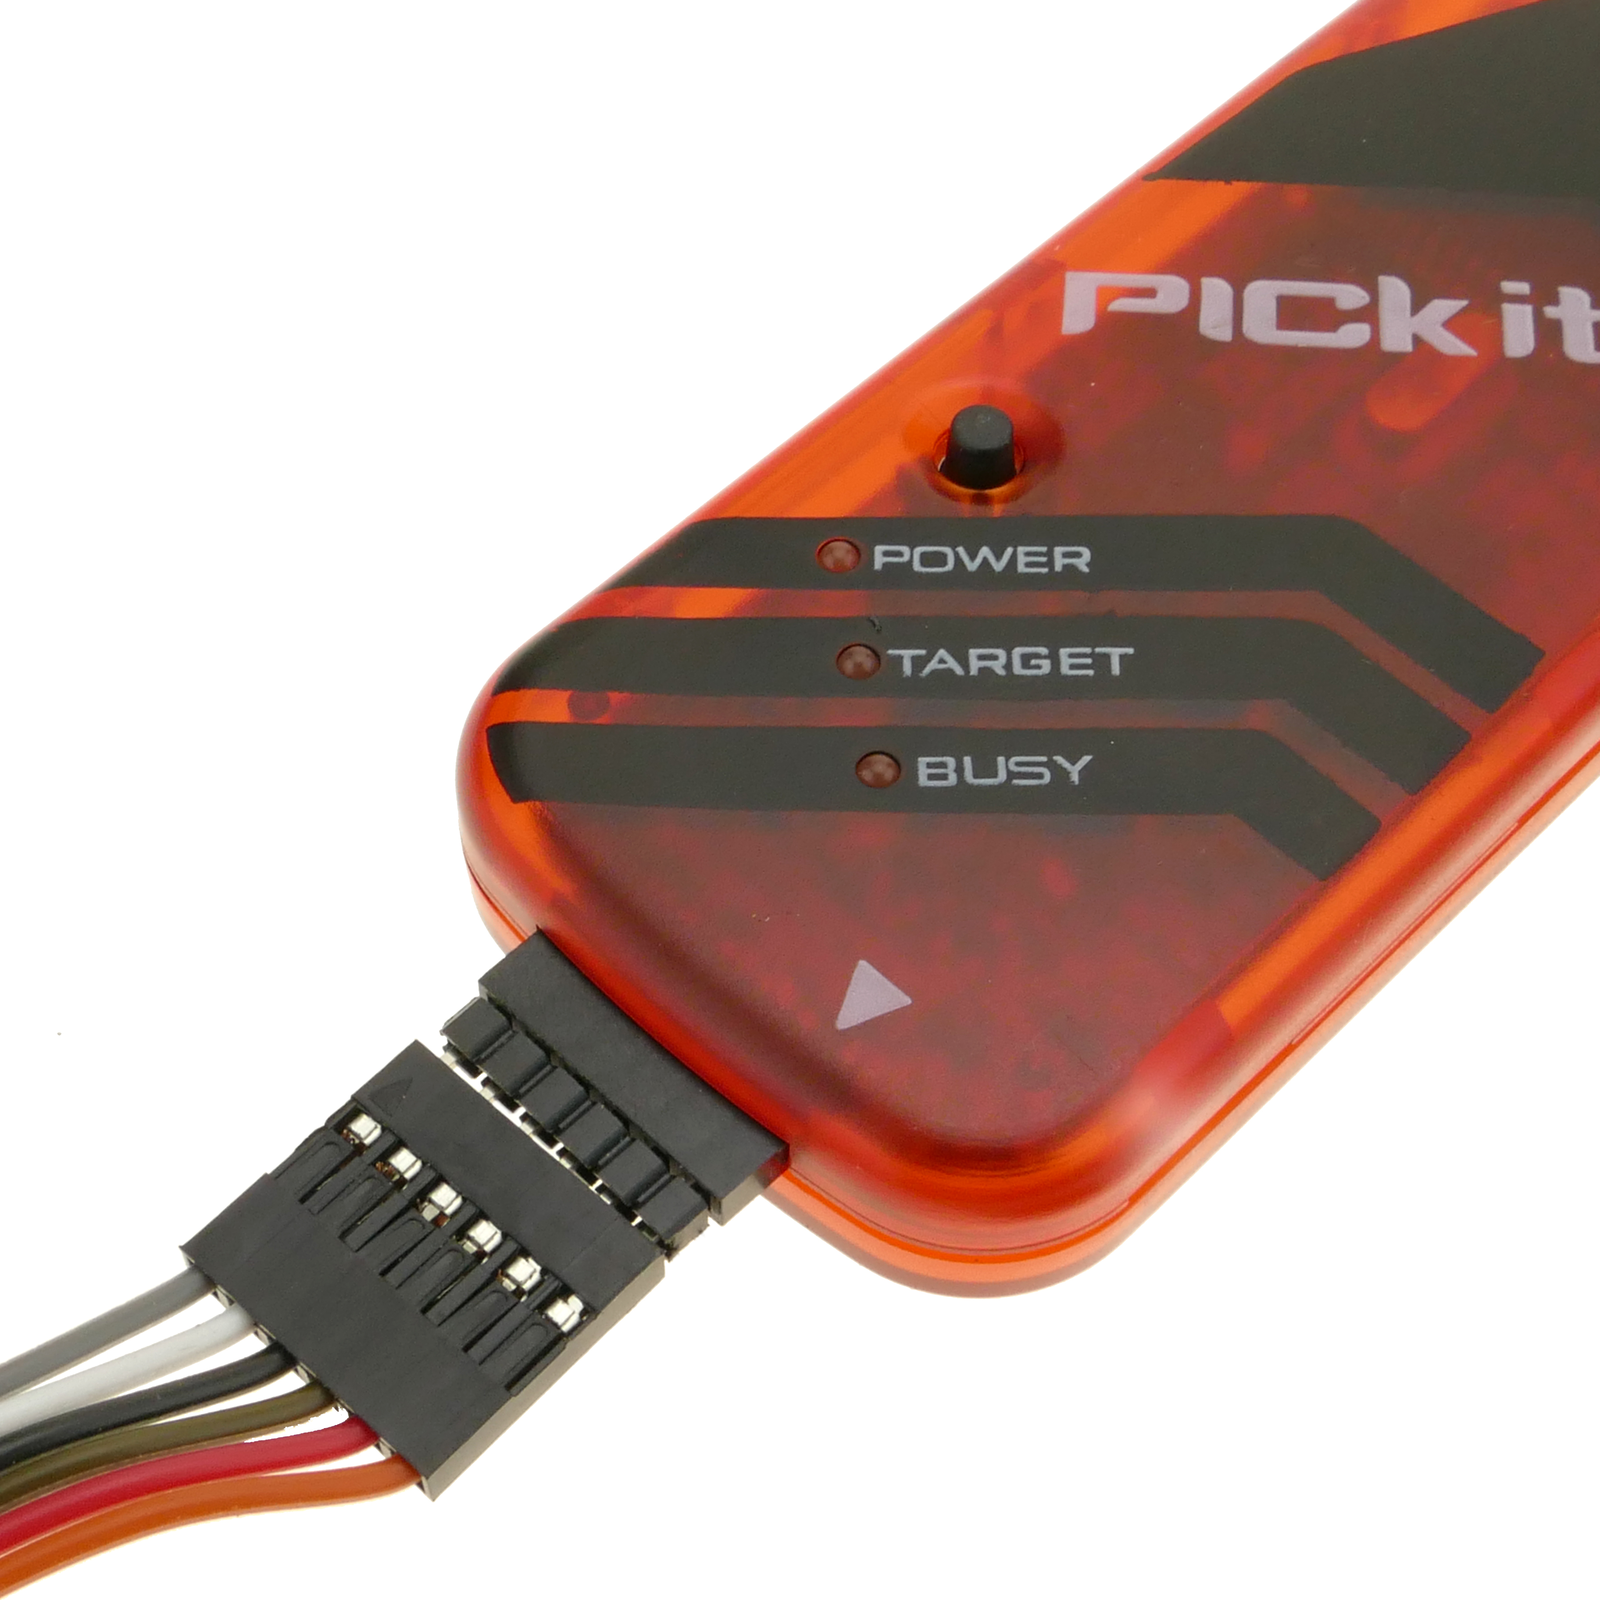 Invalidez Melbourne claramente PICKit 2 simulador programador emulador desarrolador depurador con cables  USB y Dupond - Cablematic